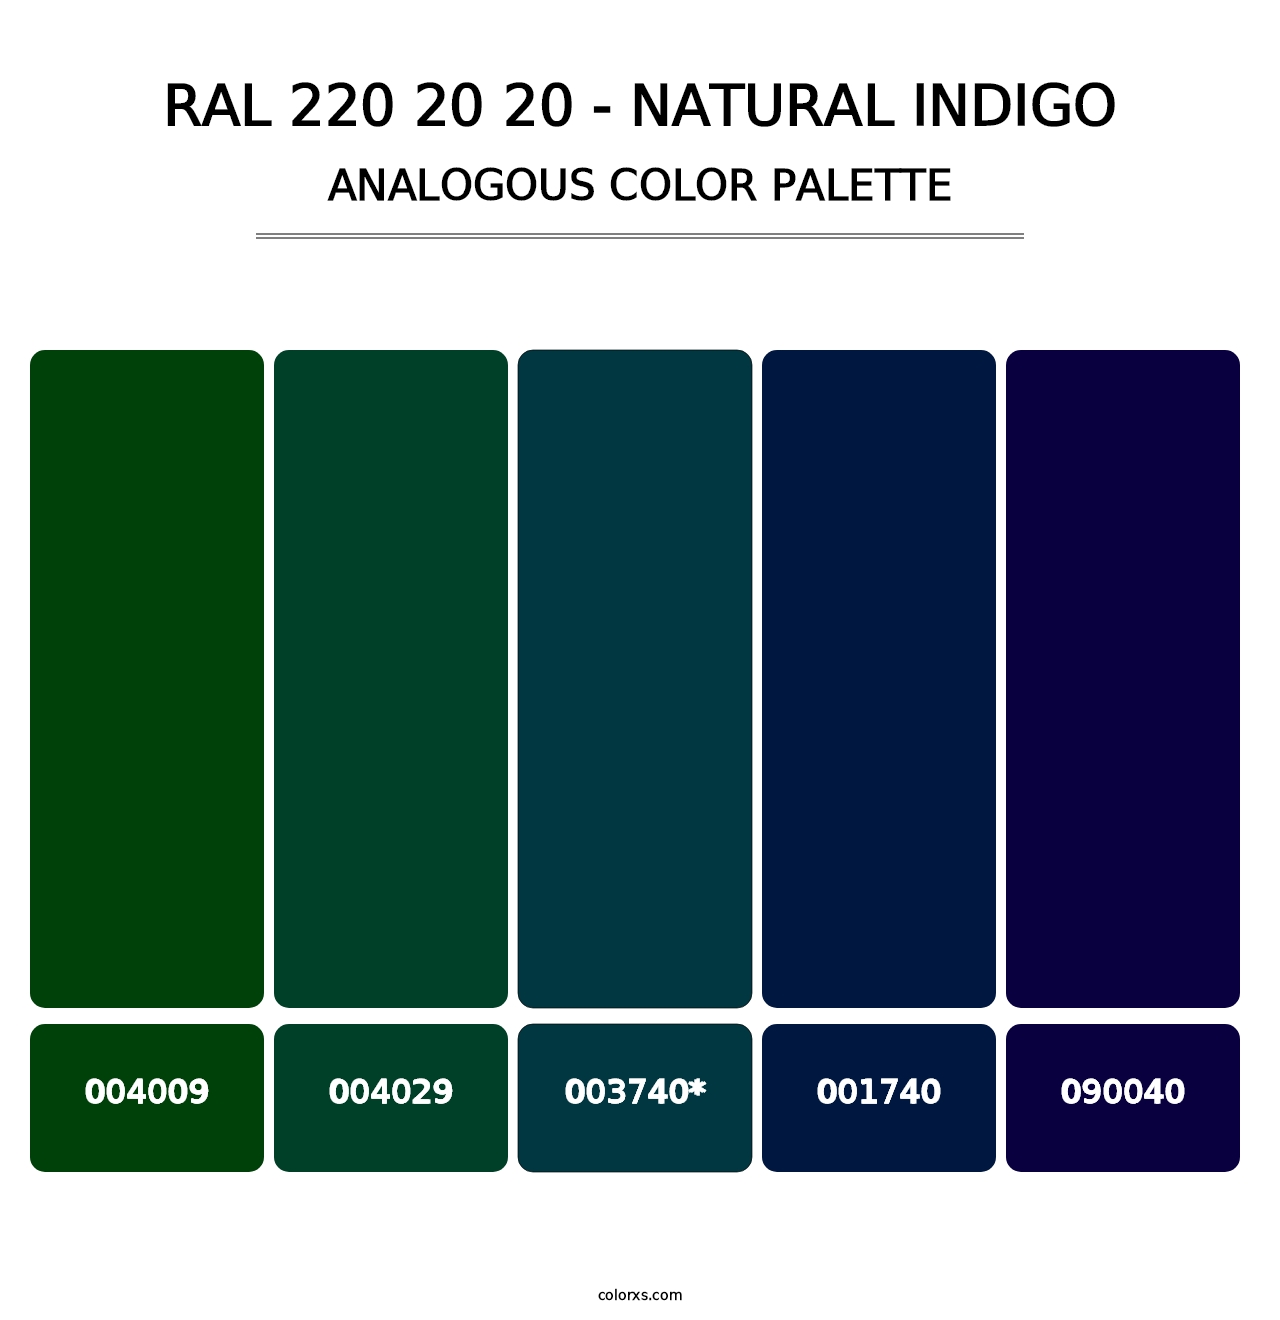 RAL 220 20 20 - Natural Indigo - Analogous Color Palette